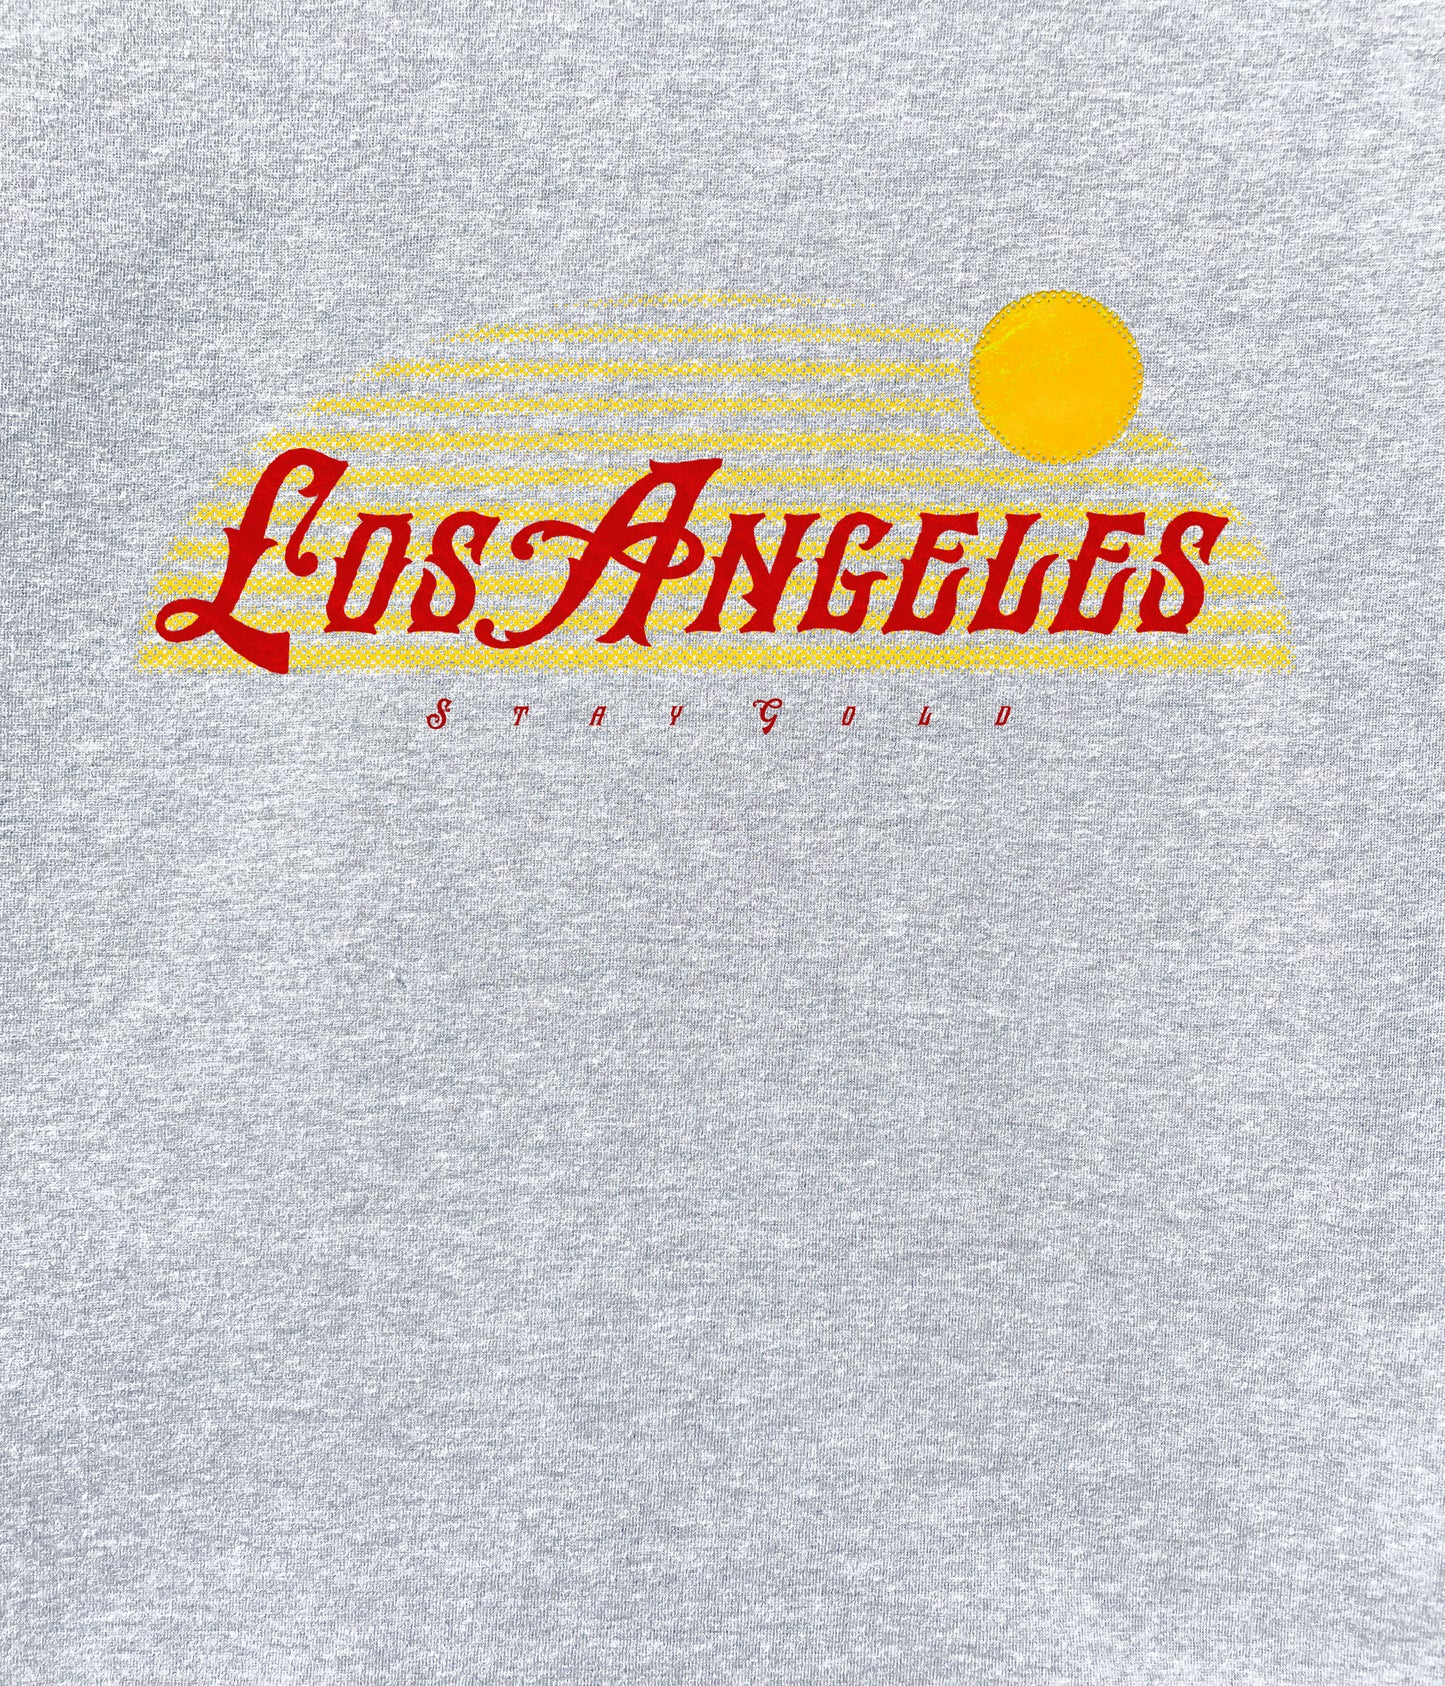 Los Angeles Stay Gold Crewneck Sweatshirt